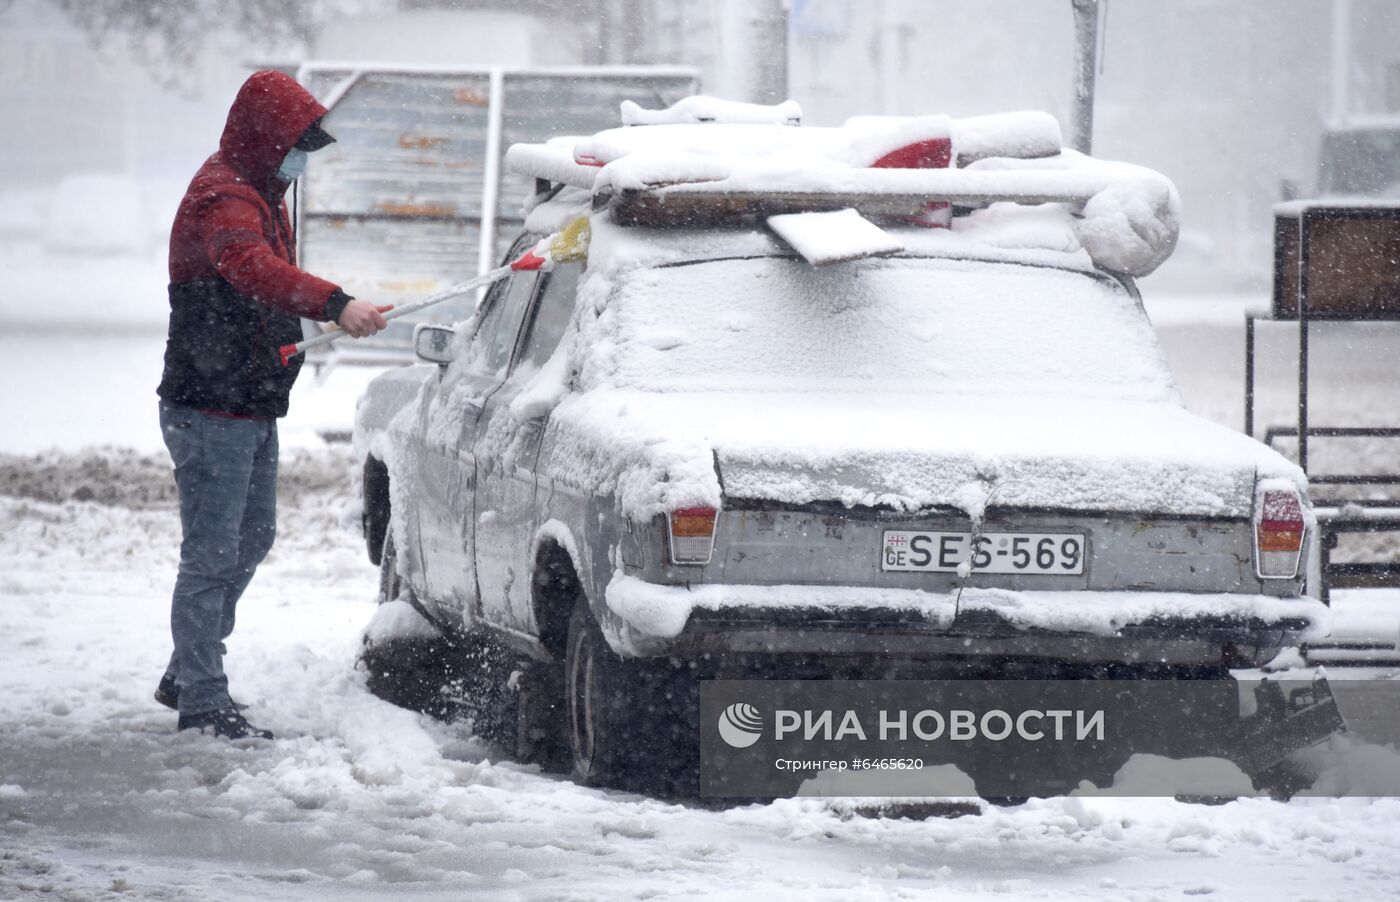 Последствия снегопада в Тбилиси